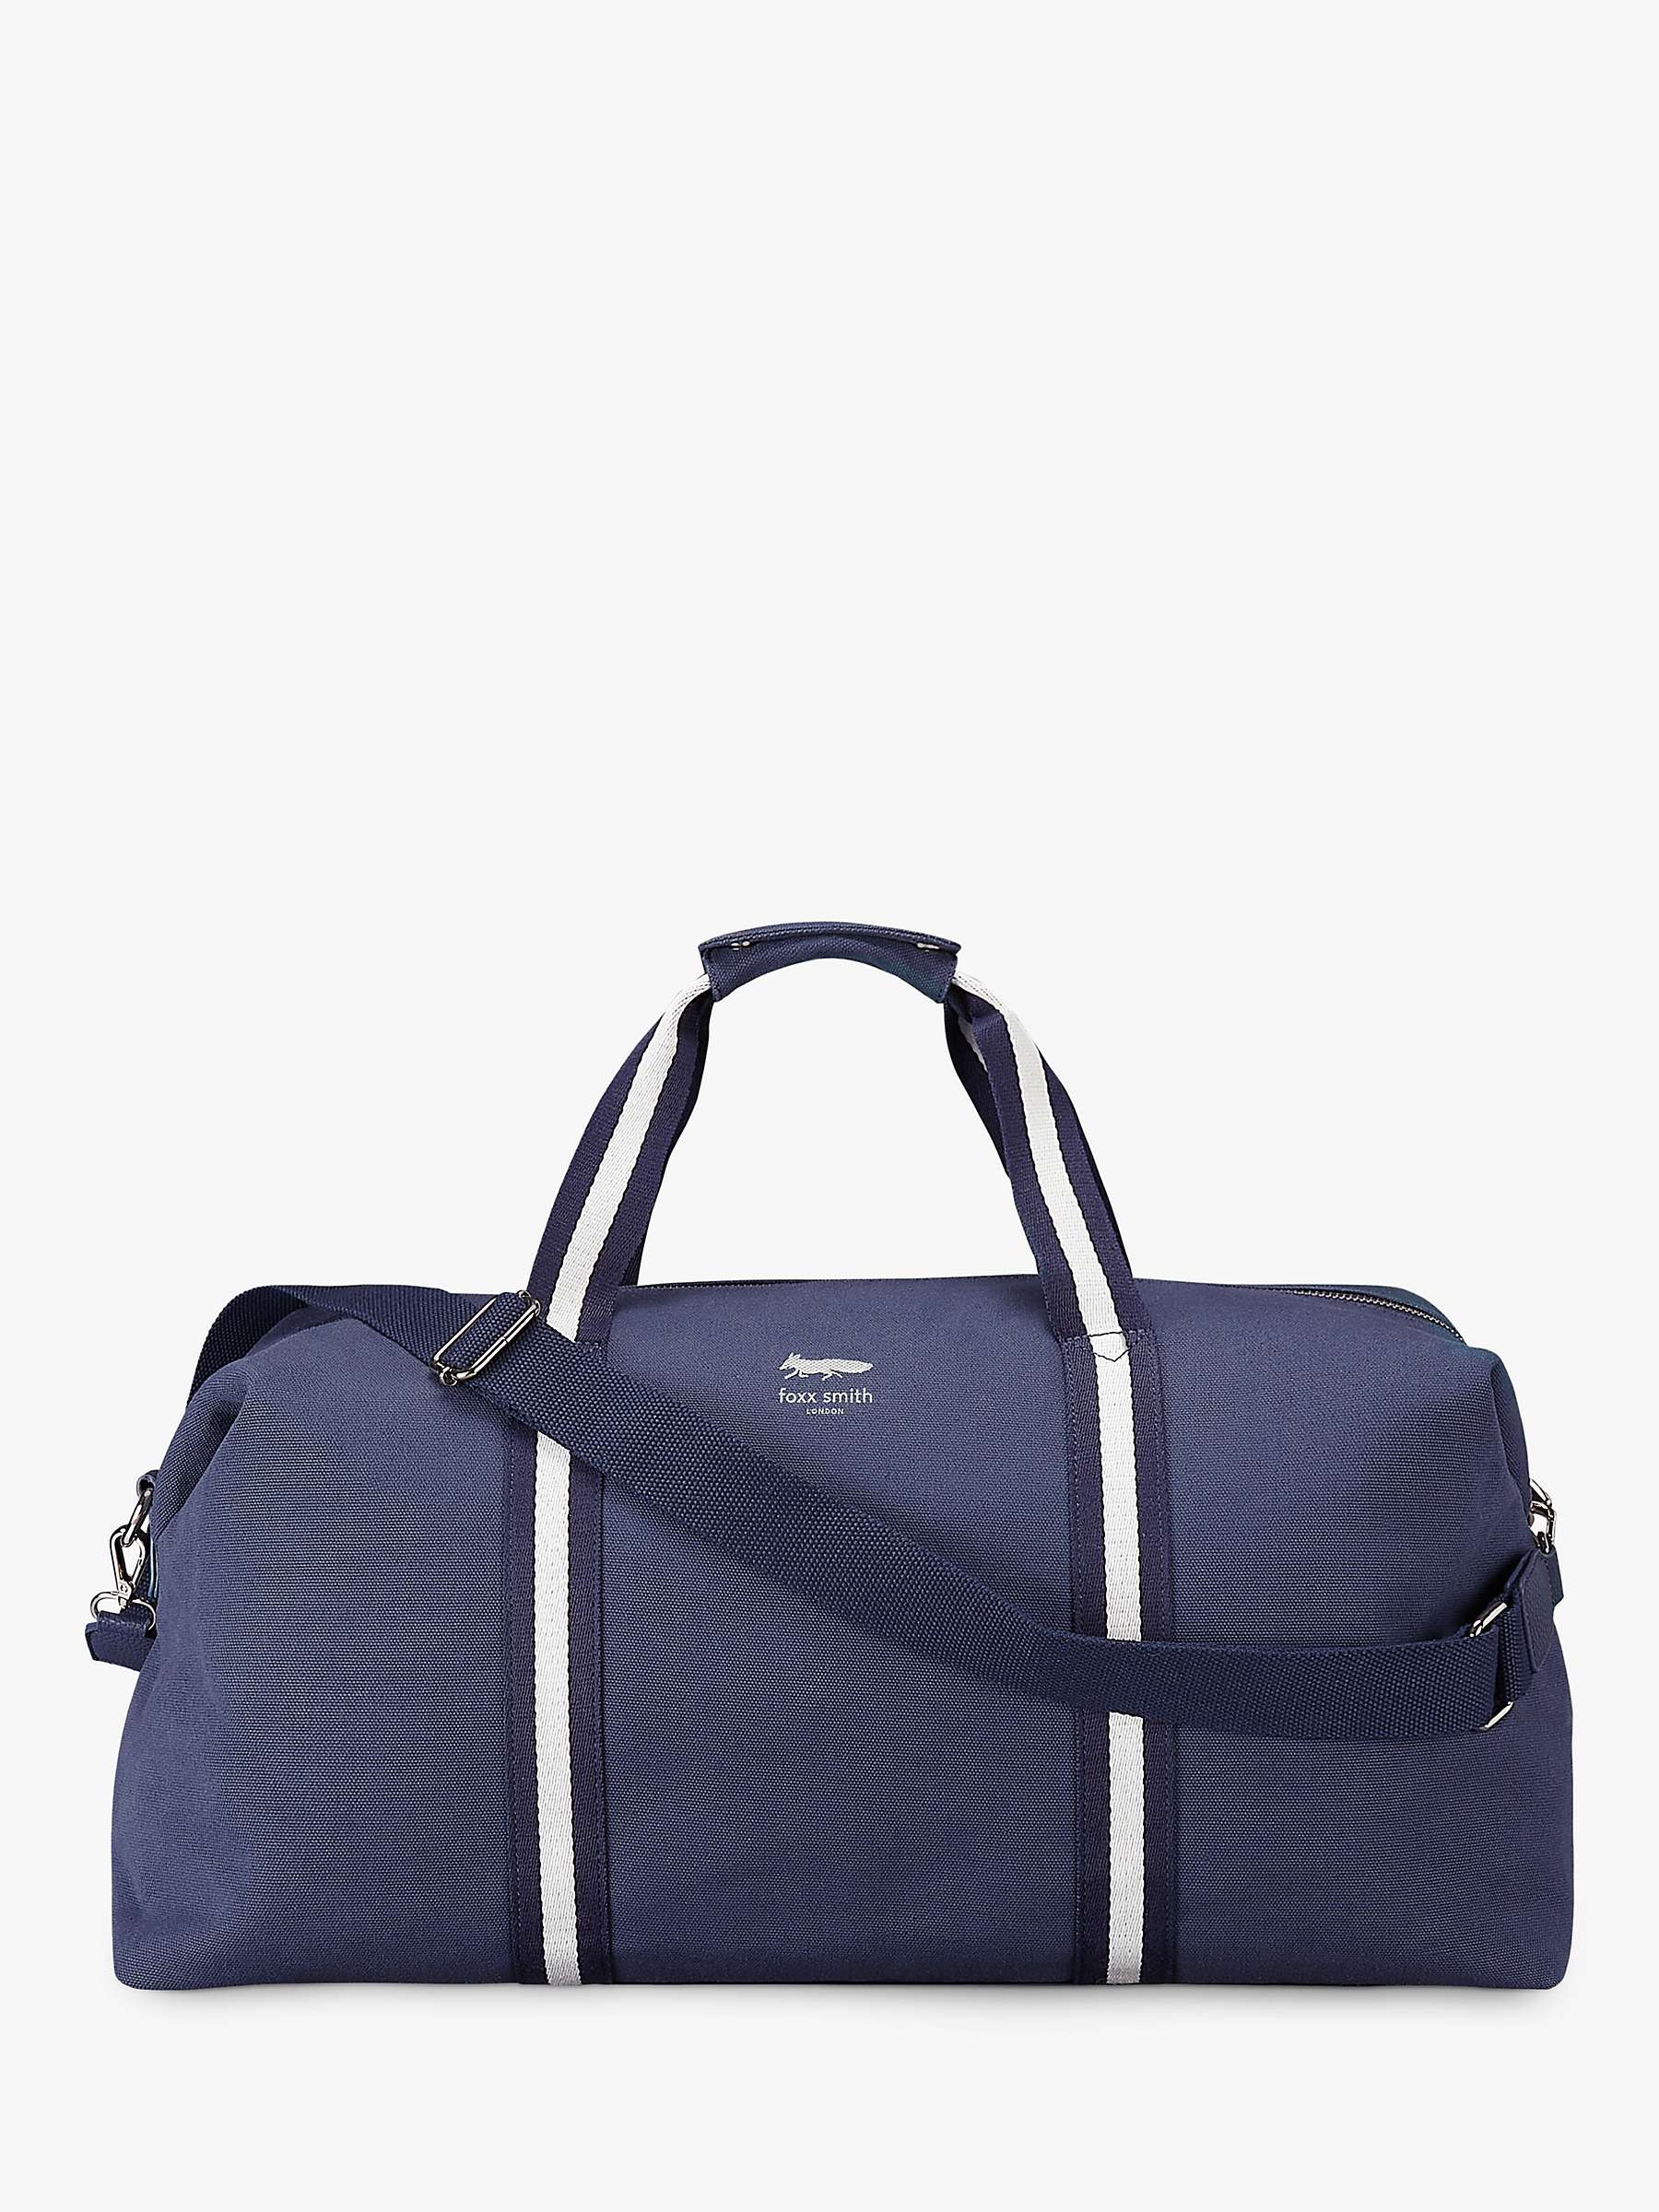 Buy Foxx Smith London Weekender Bag Online at johnlewis.com